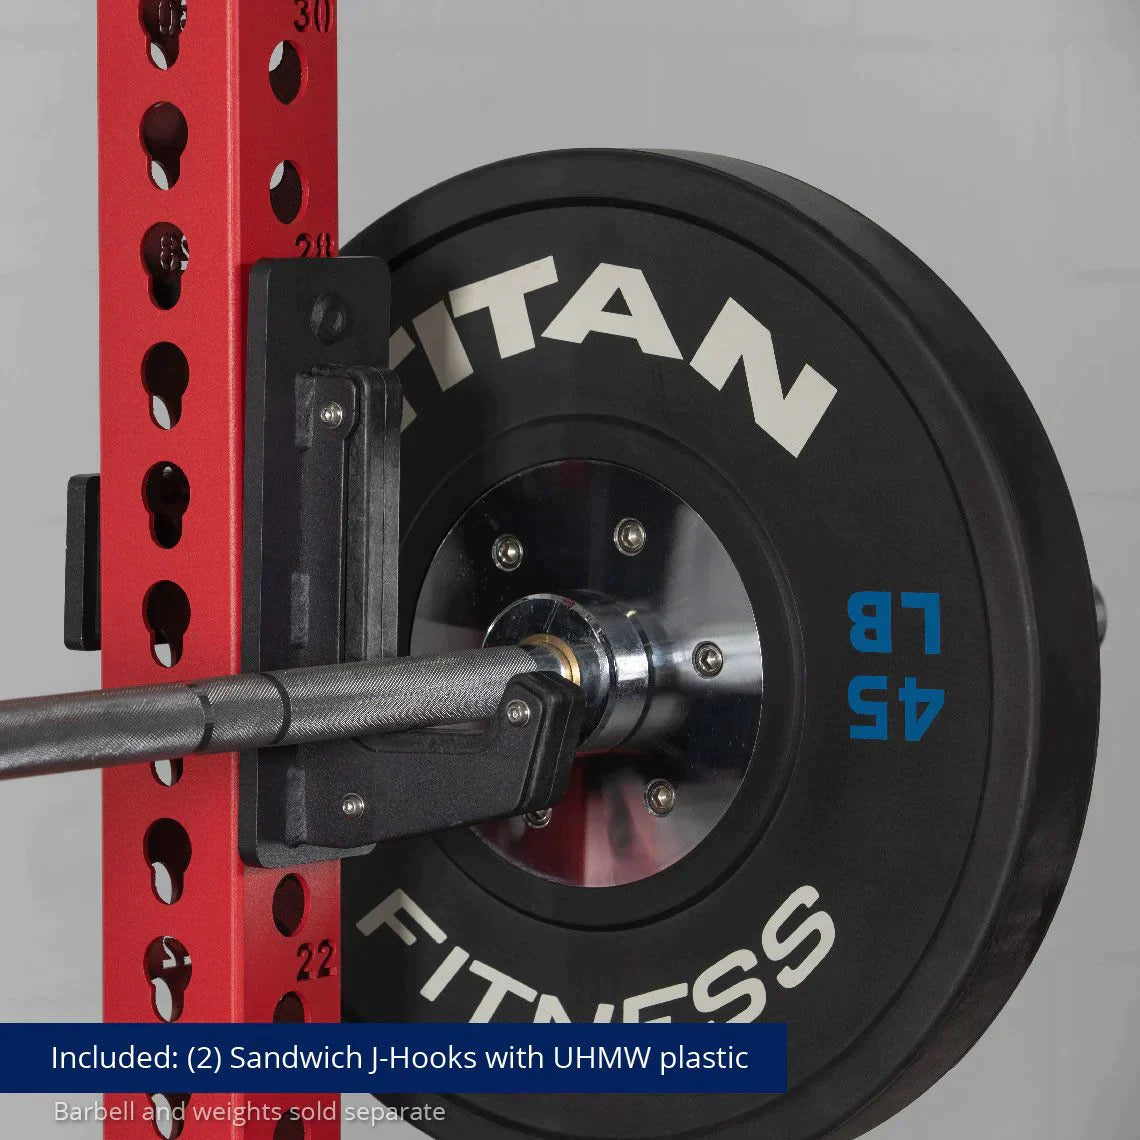 TITAN Series Power Rack 100" 36" - view 234